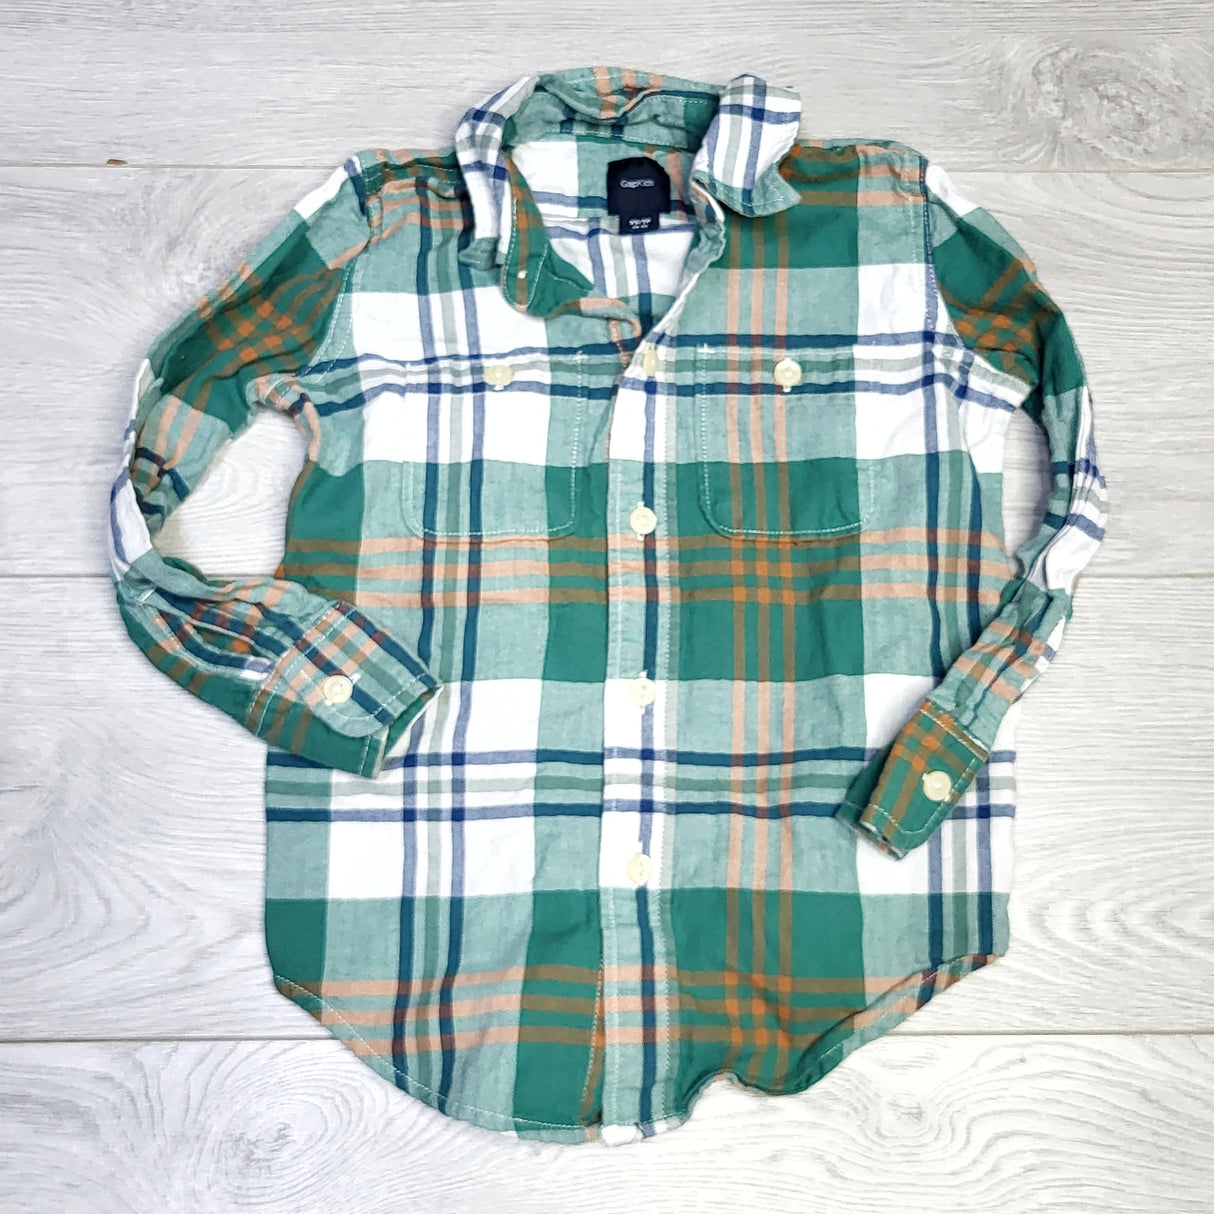 KJHN1 - Gap green plaid button down shirt. Size 4/5T